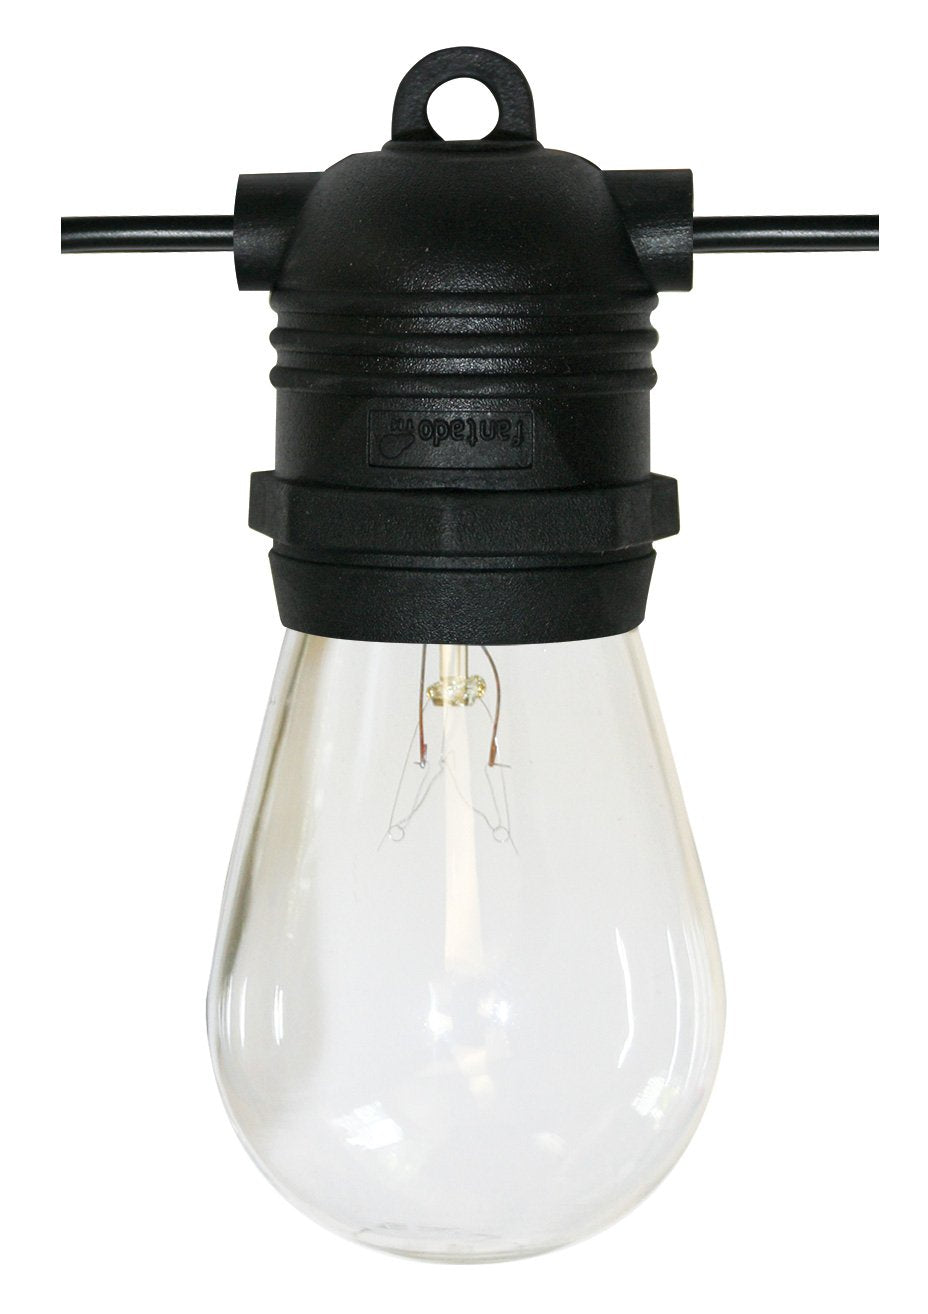 24 Socket Outdoor Commercial String Light Set, S14 Bulbs, 54 FT Black Cord w/ E26 Medium Base, Weatherproof